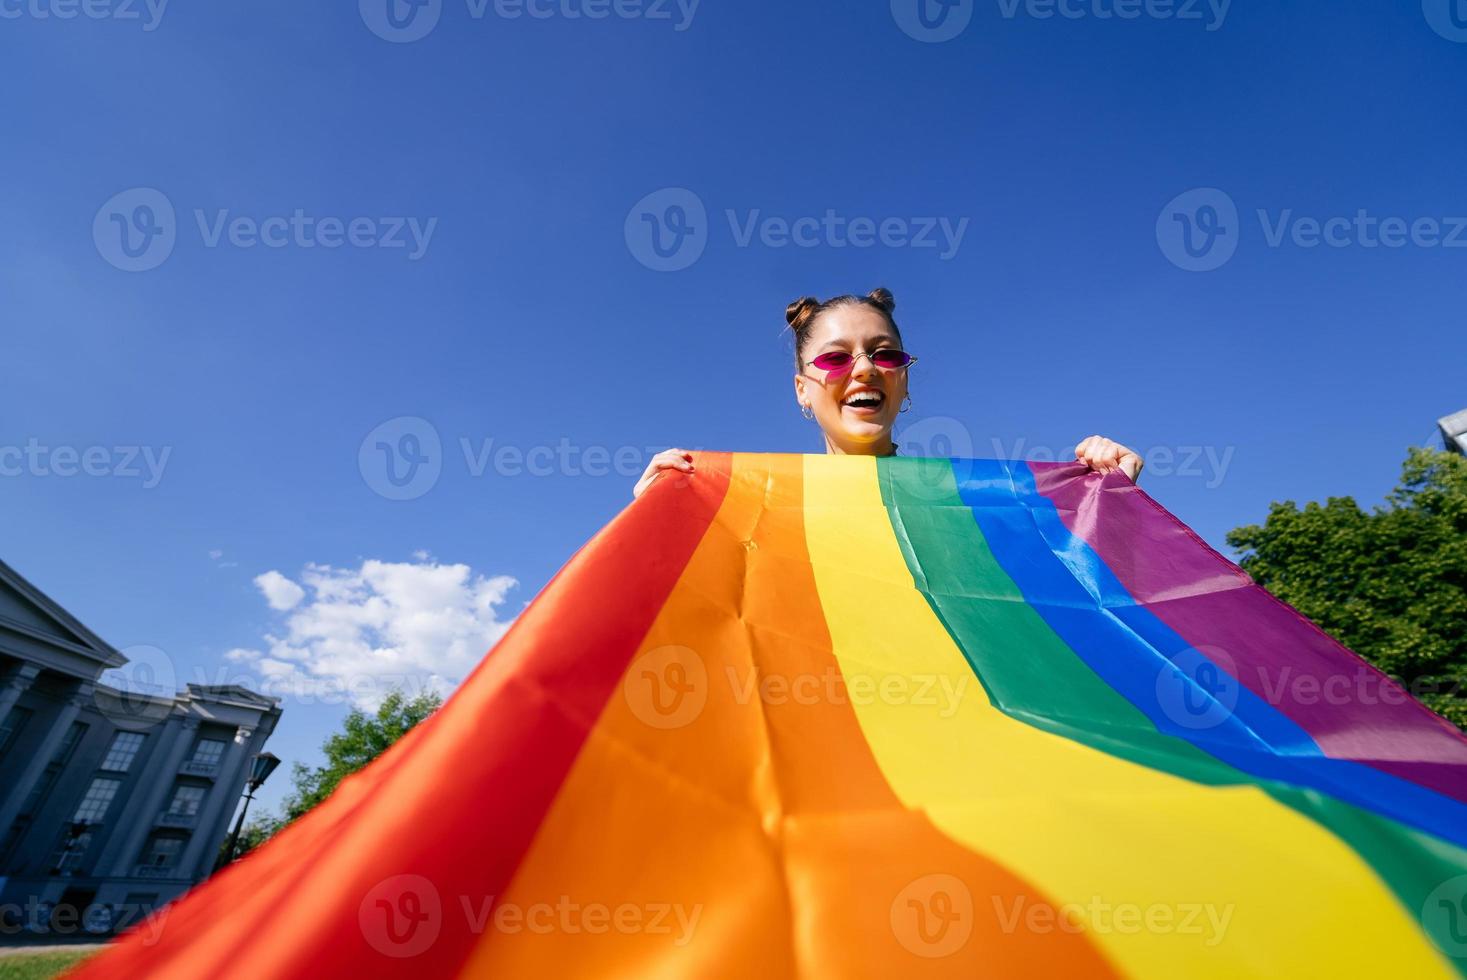 en ung kvinna utvecklas en regnbåge flagga mot de himmel foto